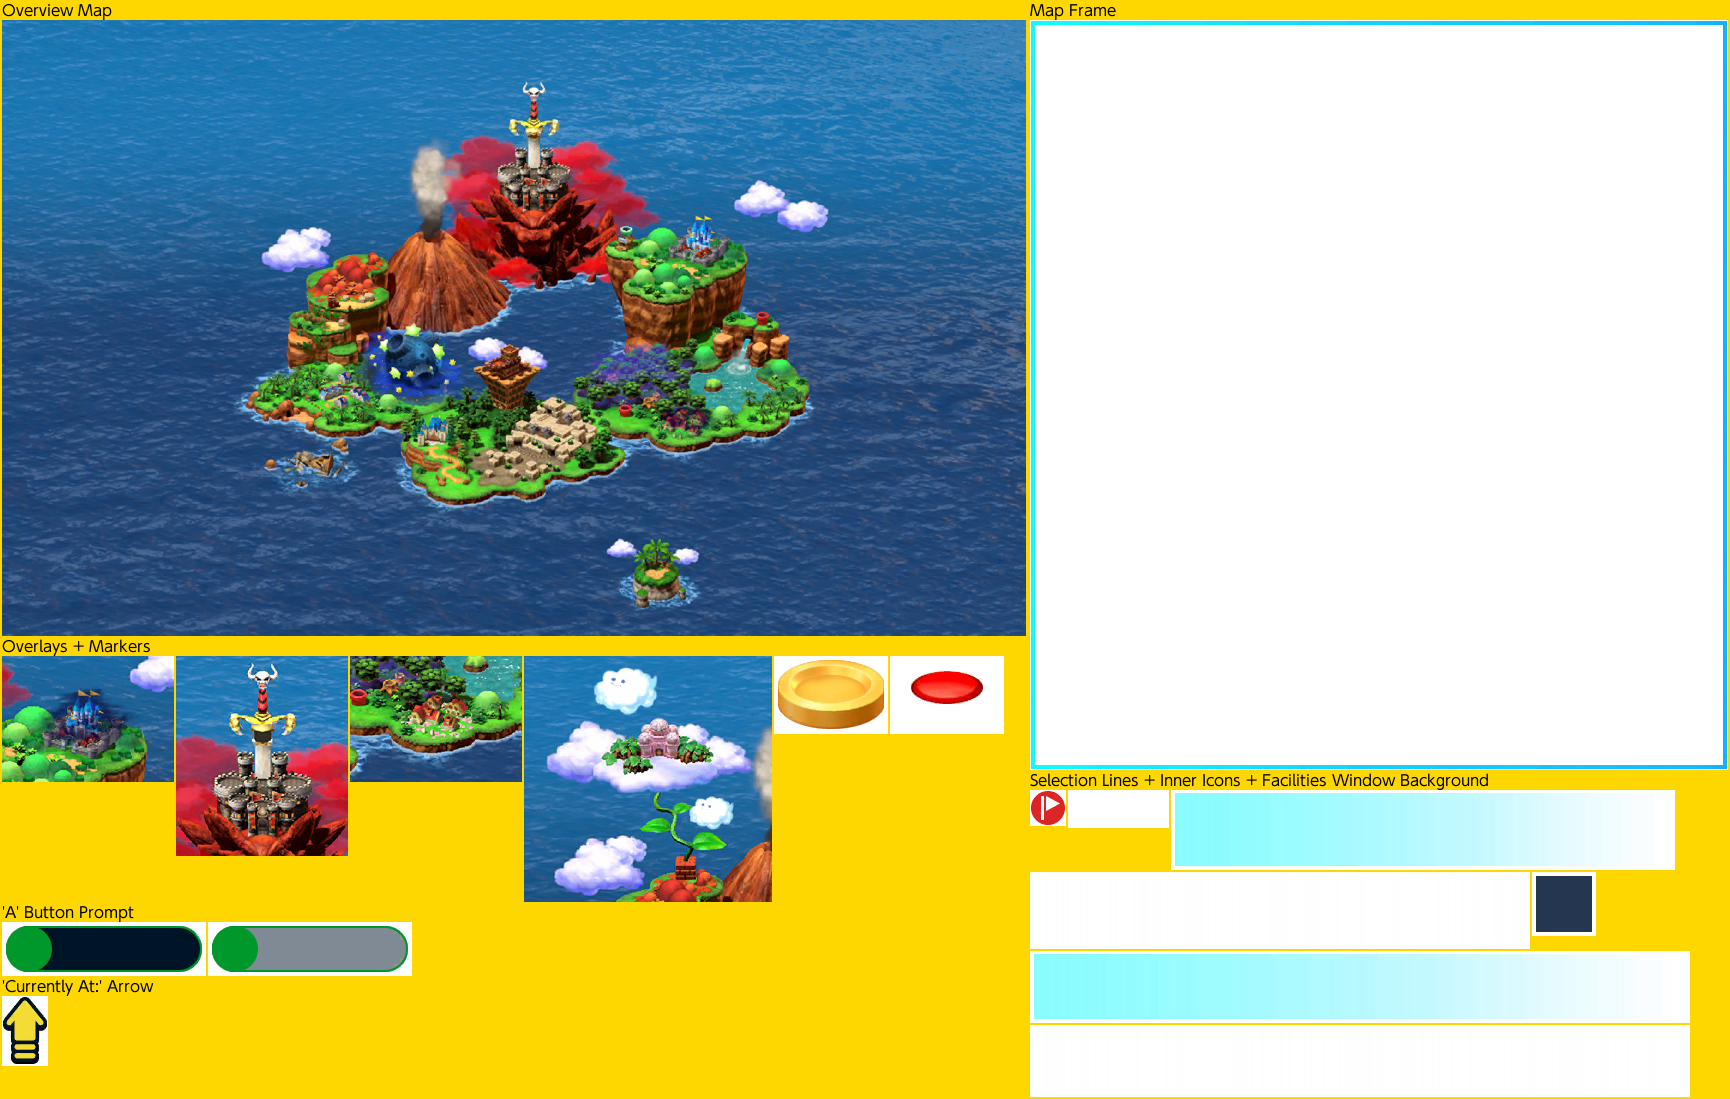 Super Mario RPG - Main Menu - Map Overview and Parts